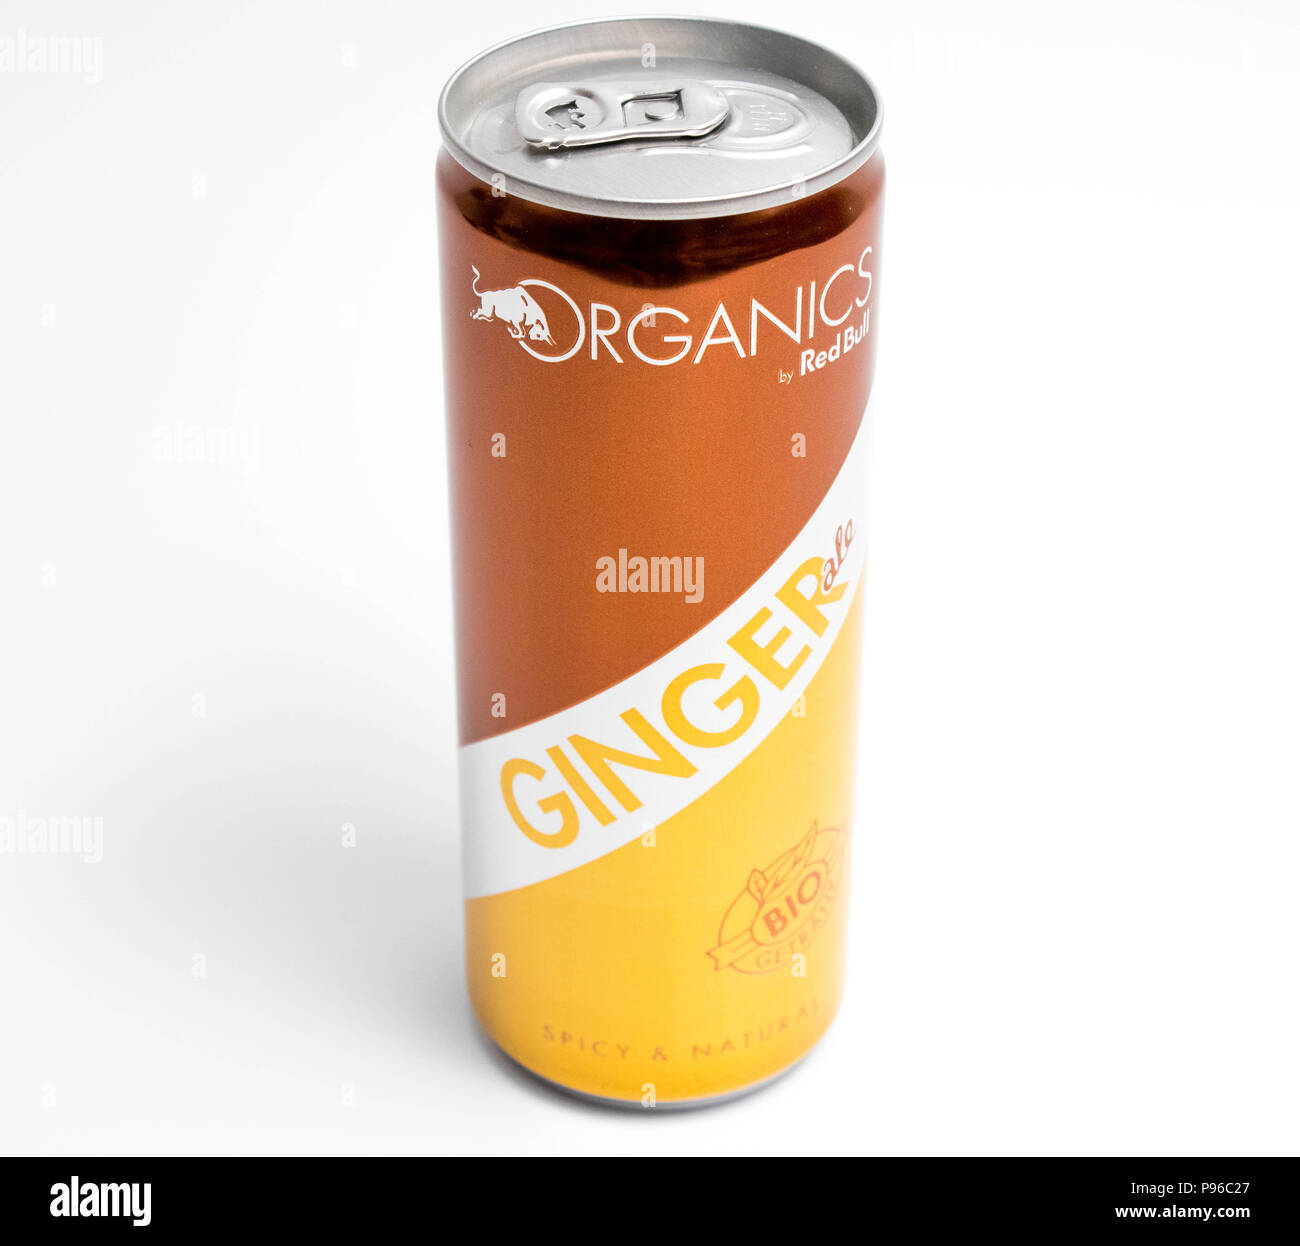 Red Bull Ale organic drink Stock Photo - Alamy